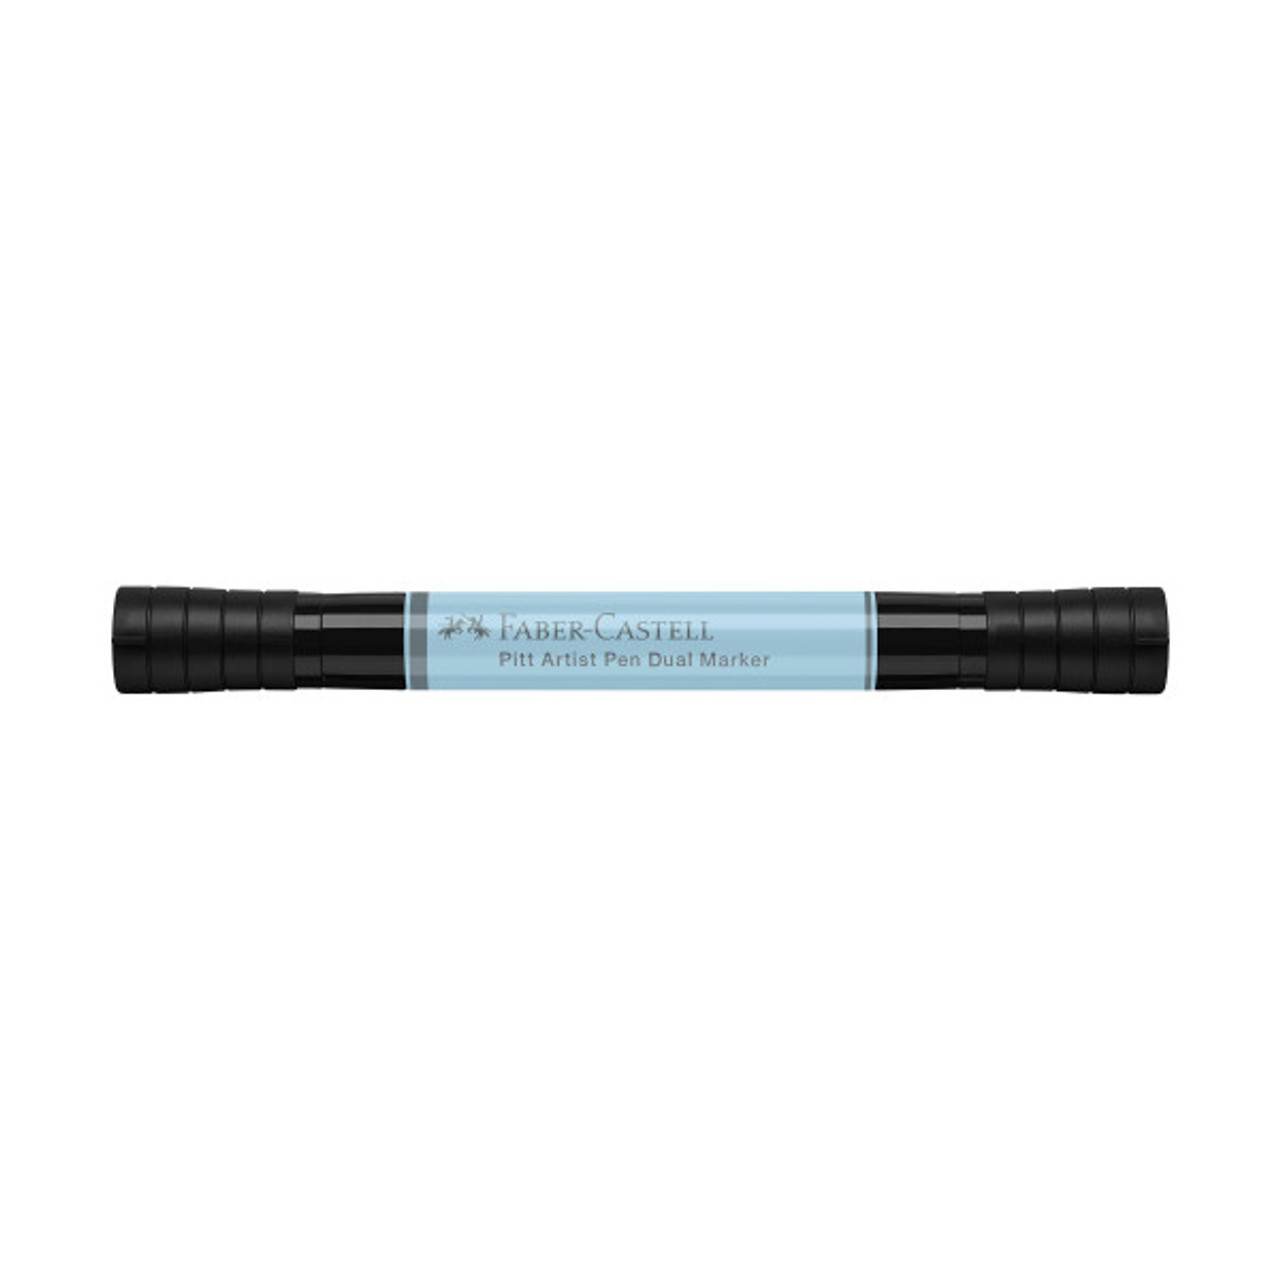 148 Ice Blue - Buy 4, Get 1 Free - Pitt Artist Pen Dual Marker - Faber Castell